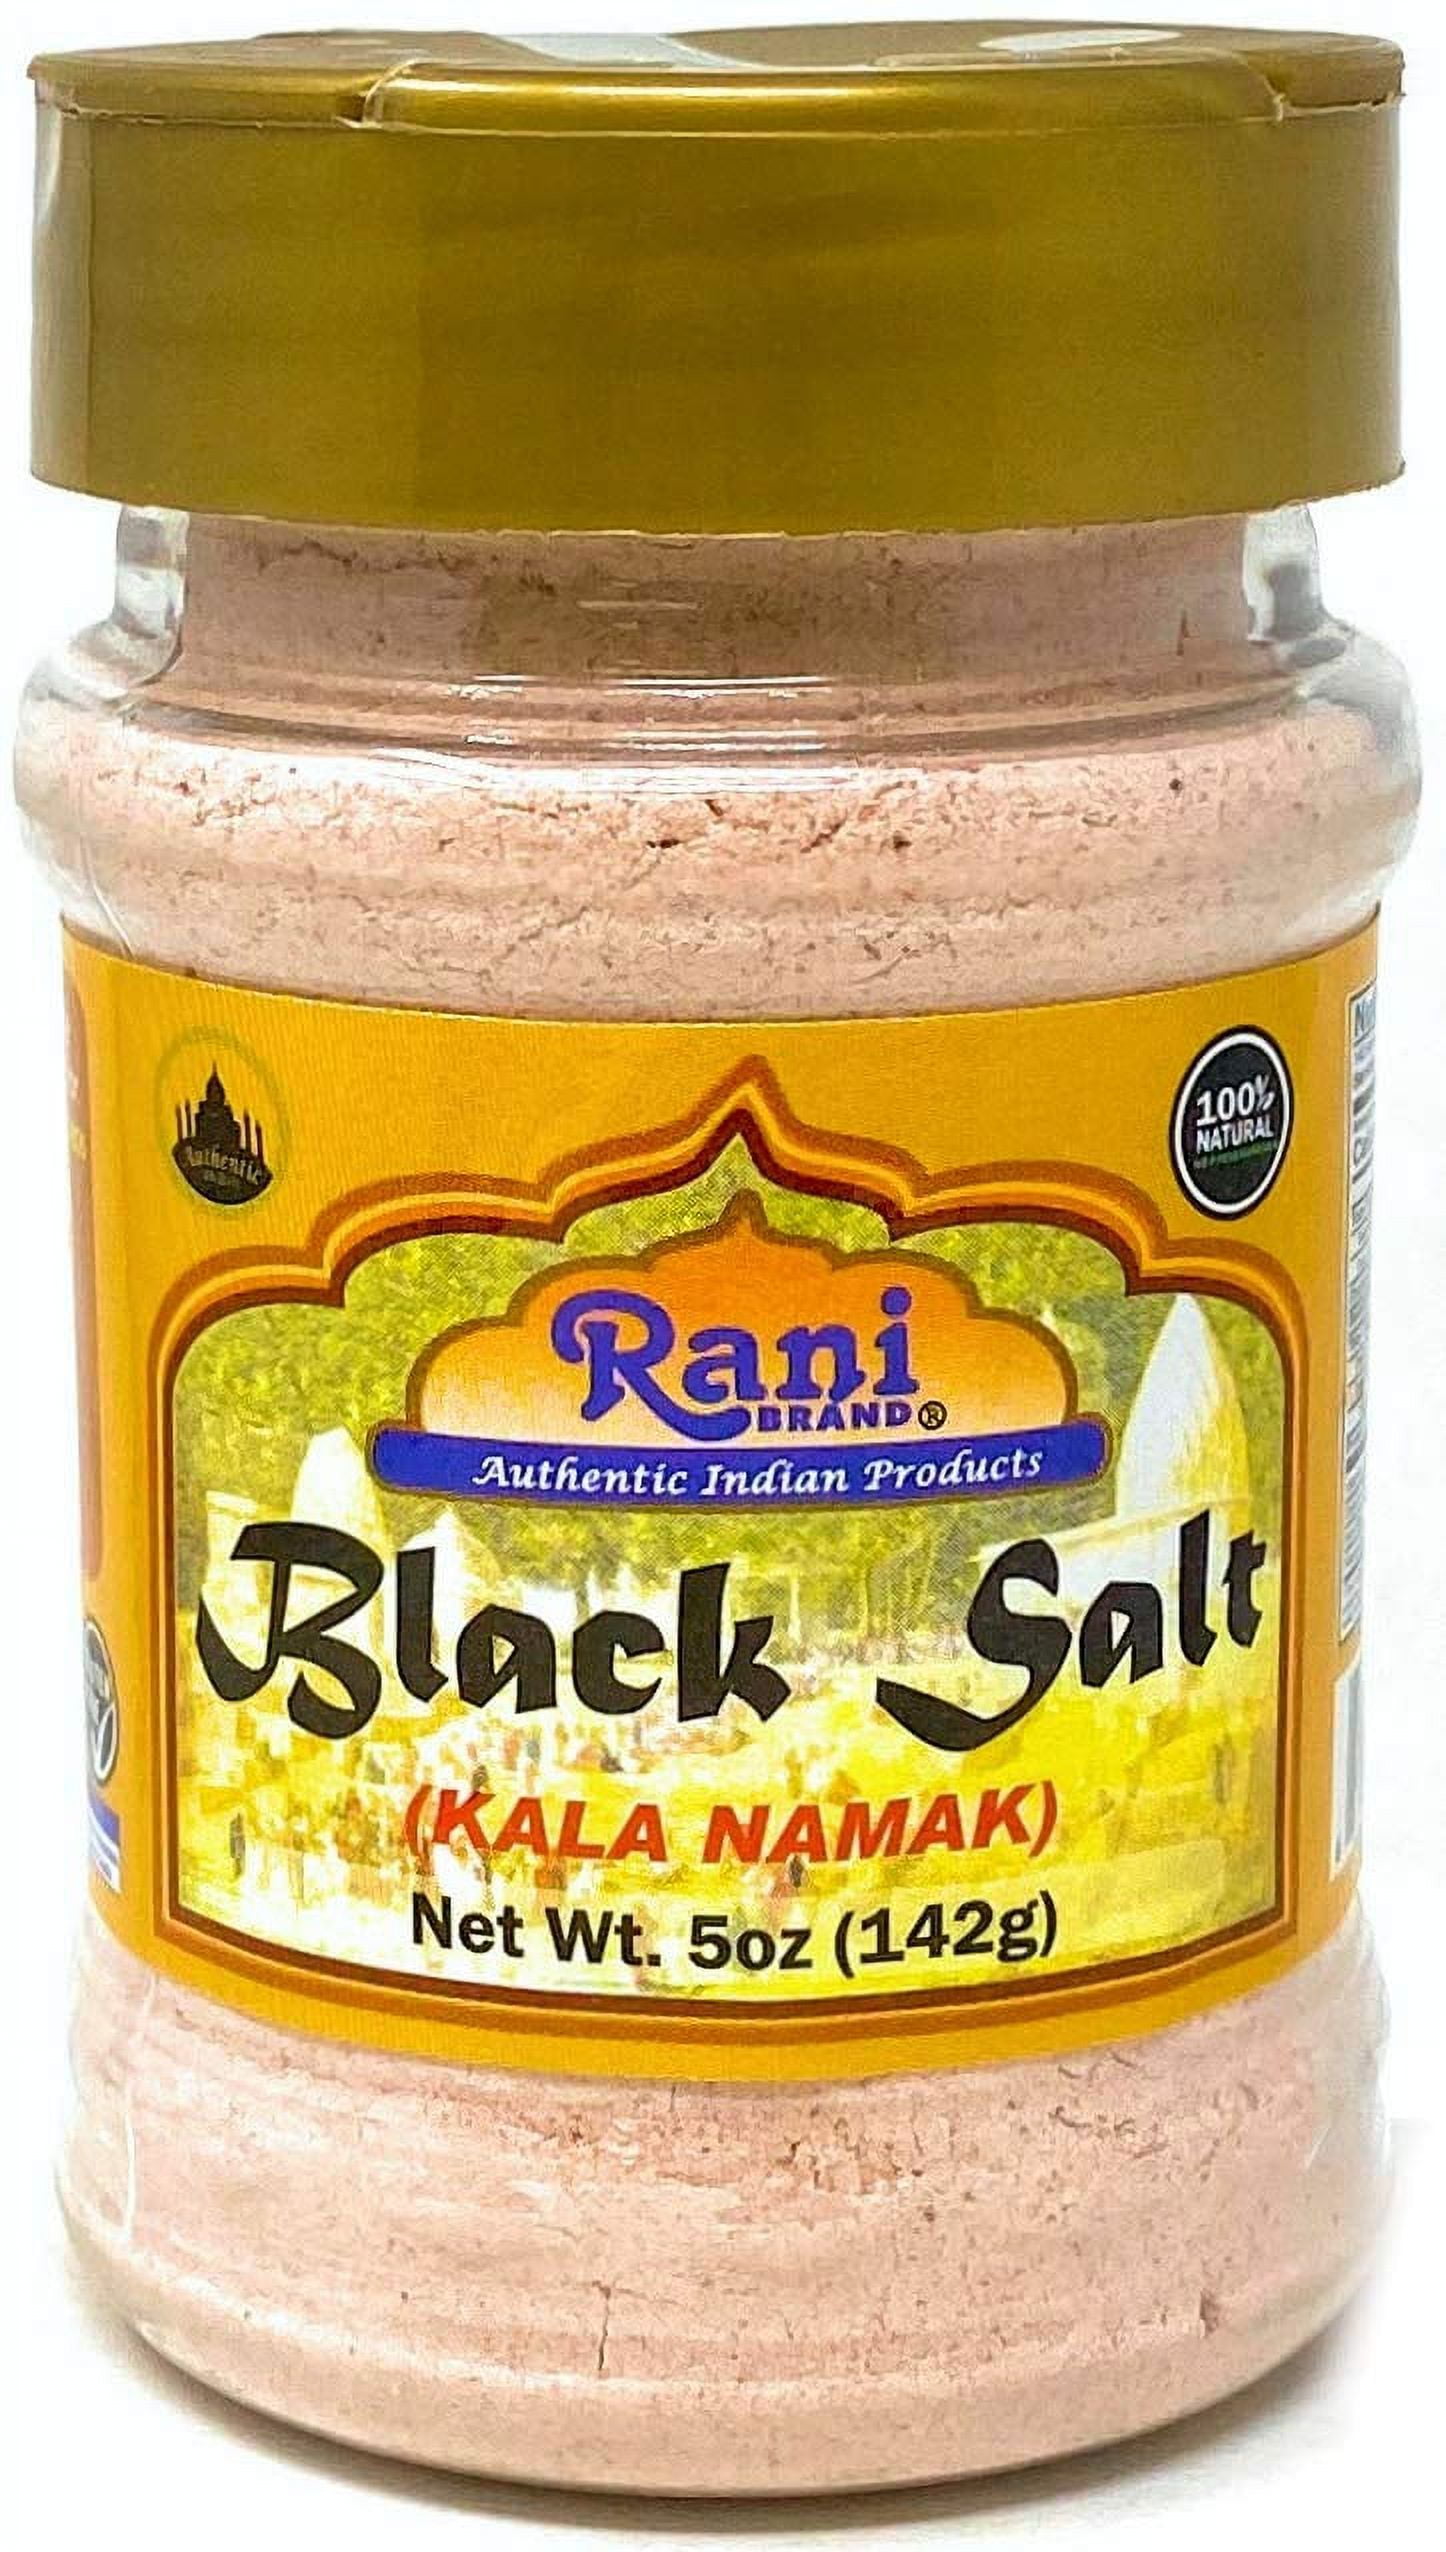 Rani Black Salt (Kala Namak Mineral) Powder, Vegan 5oz (142g) Unrefined,  Pure and Natural, Gluten Friendly, NON-GMO, Indian Origin